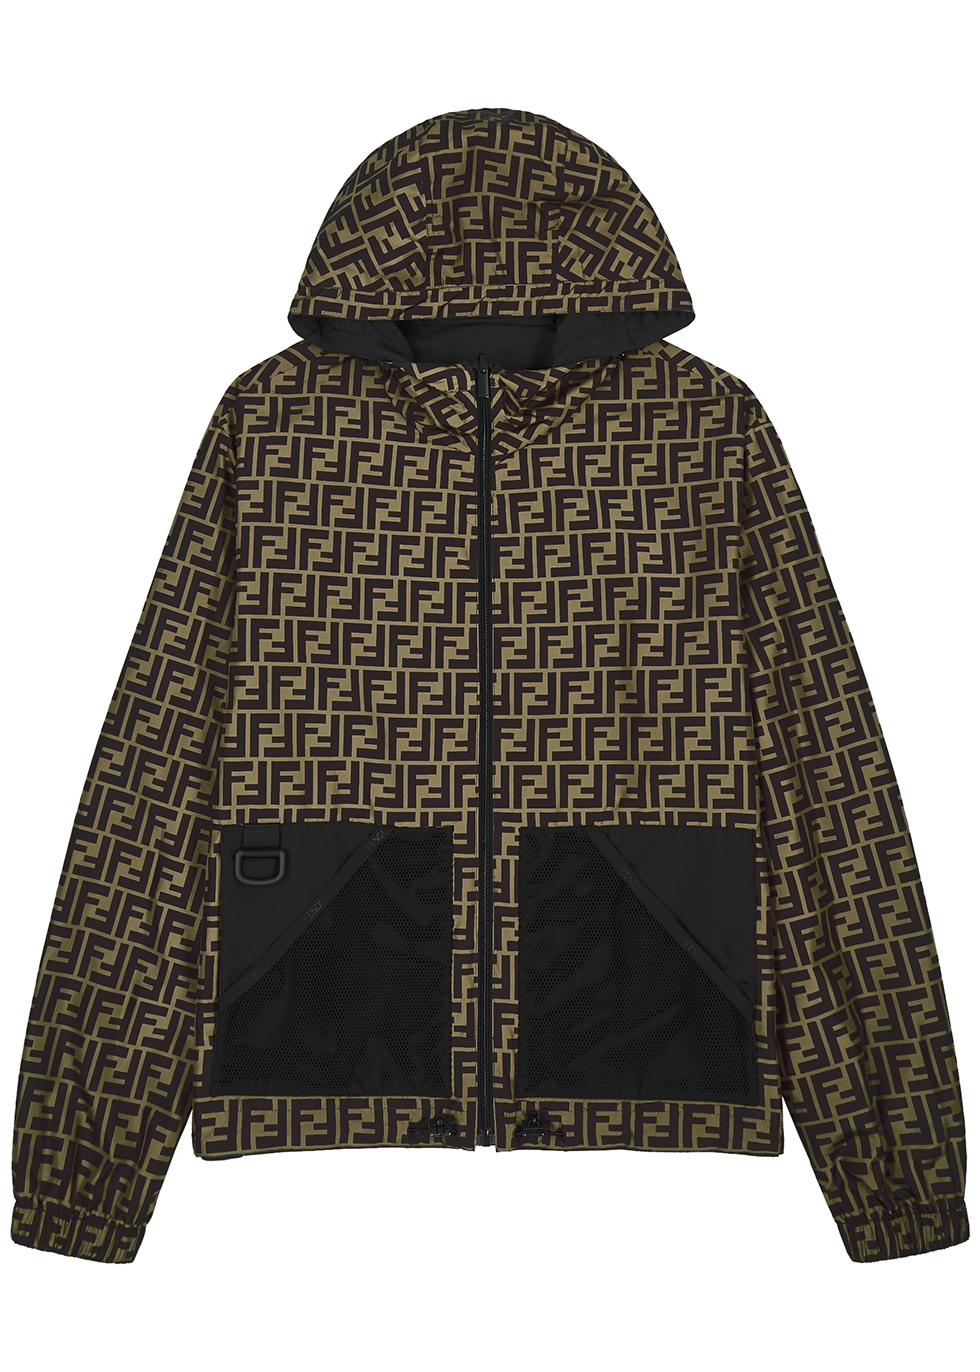 Fendi Black reversible shell jacket 